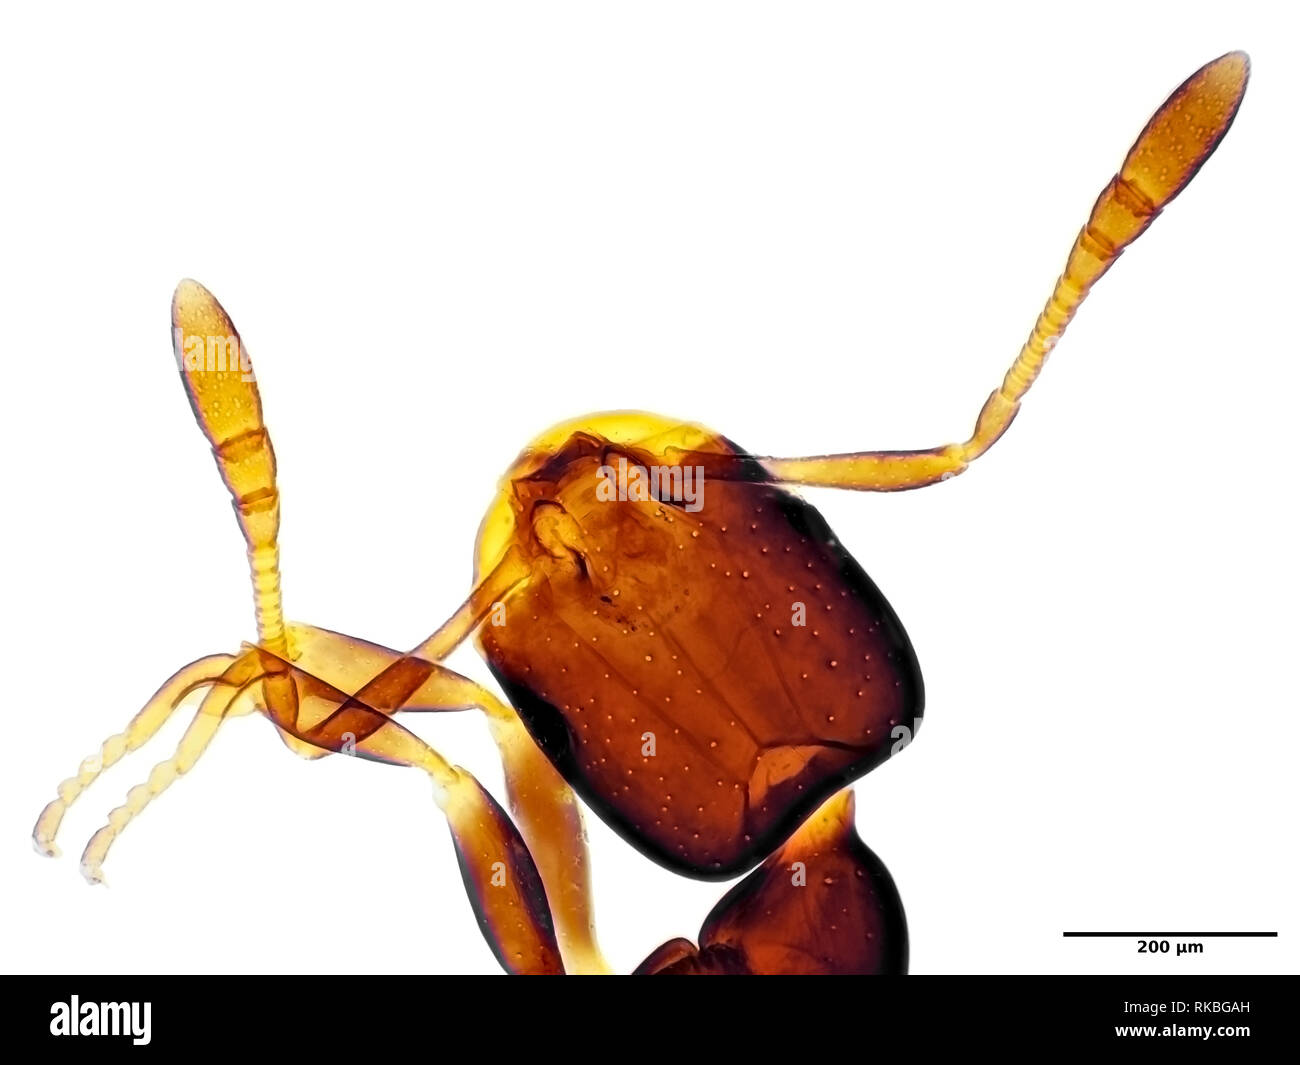 Winzige Ameise unter dem Mikroskop, Sichtfeld ist ca. 1,2 mm Breite Stockfoto